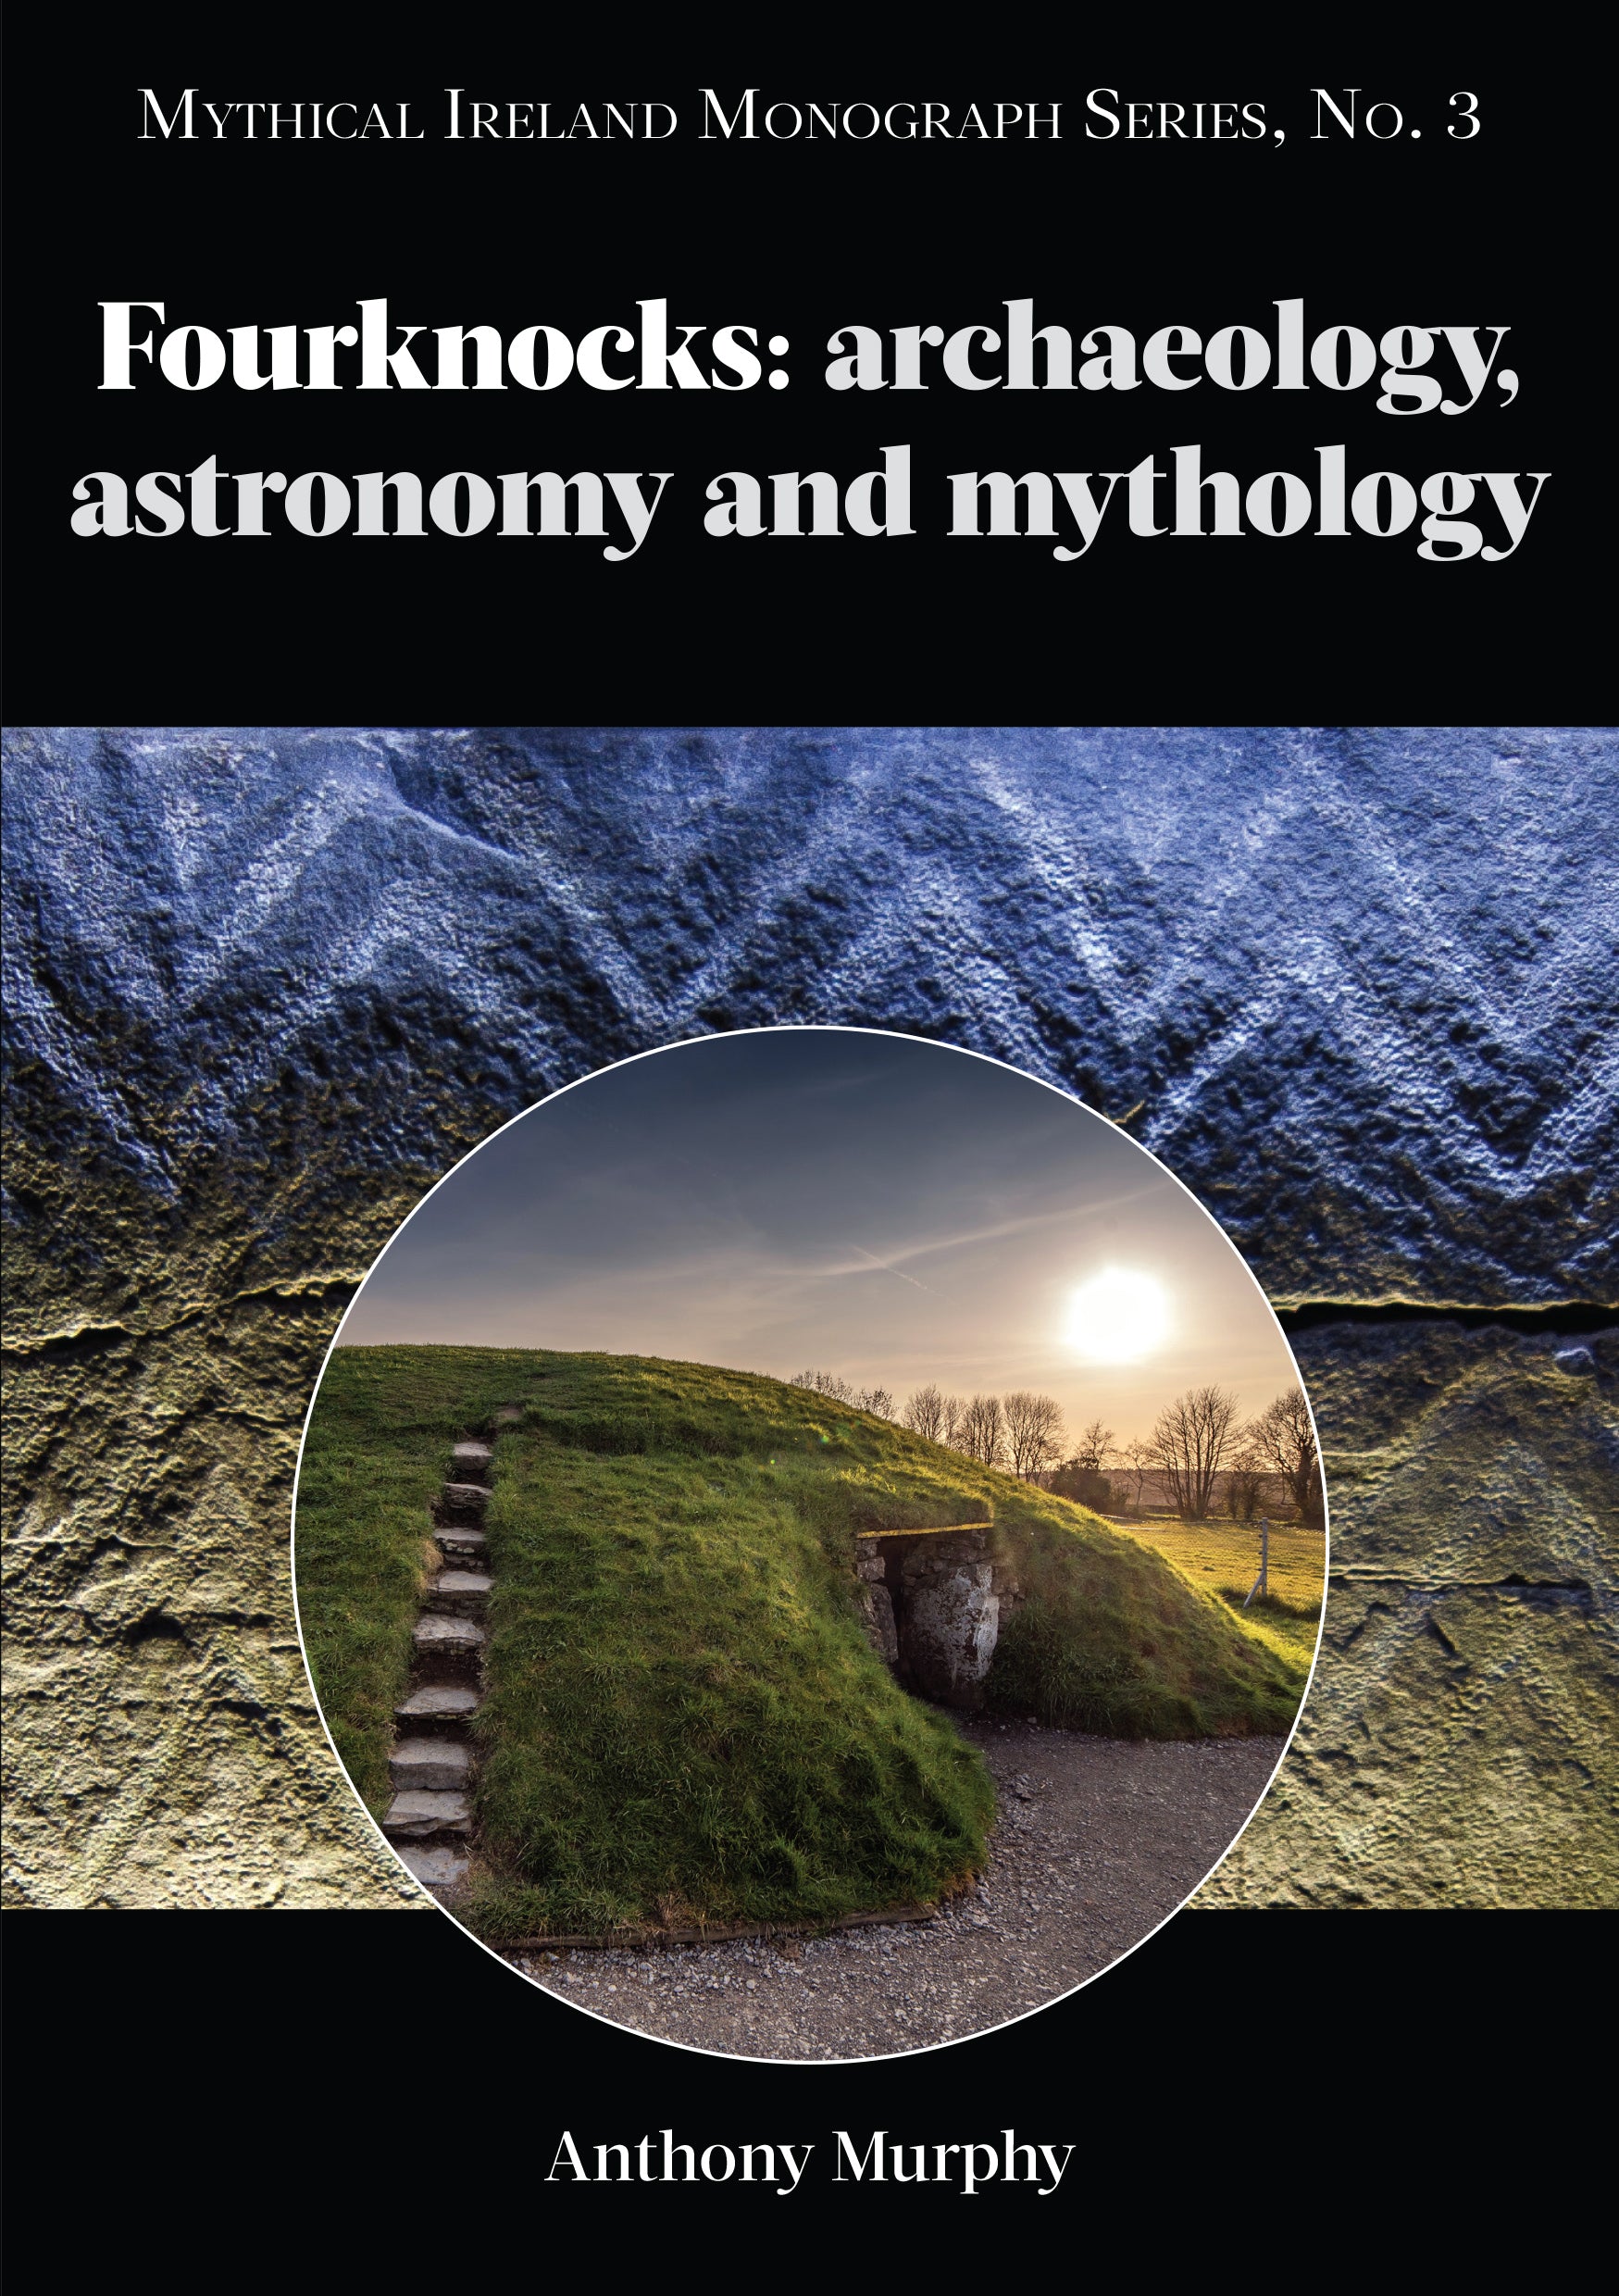 Book. Fourknocks. Astronomy. Archaeology. Mythology. Irelands's ancient east.